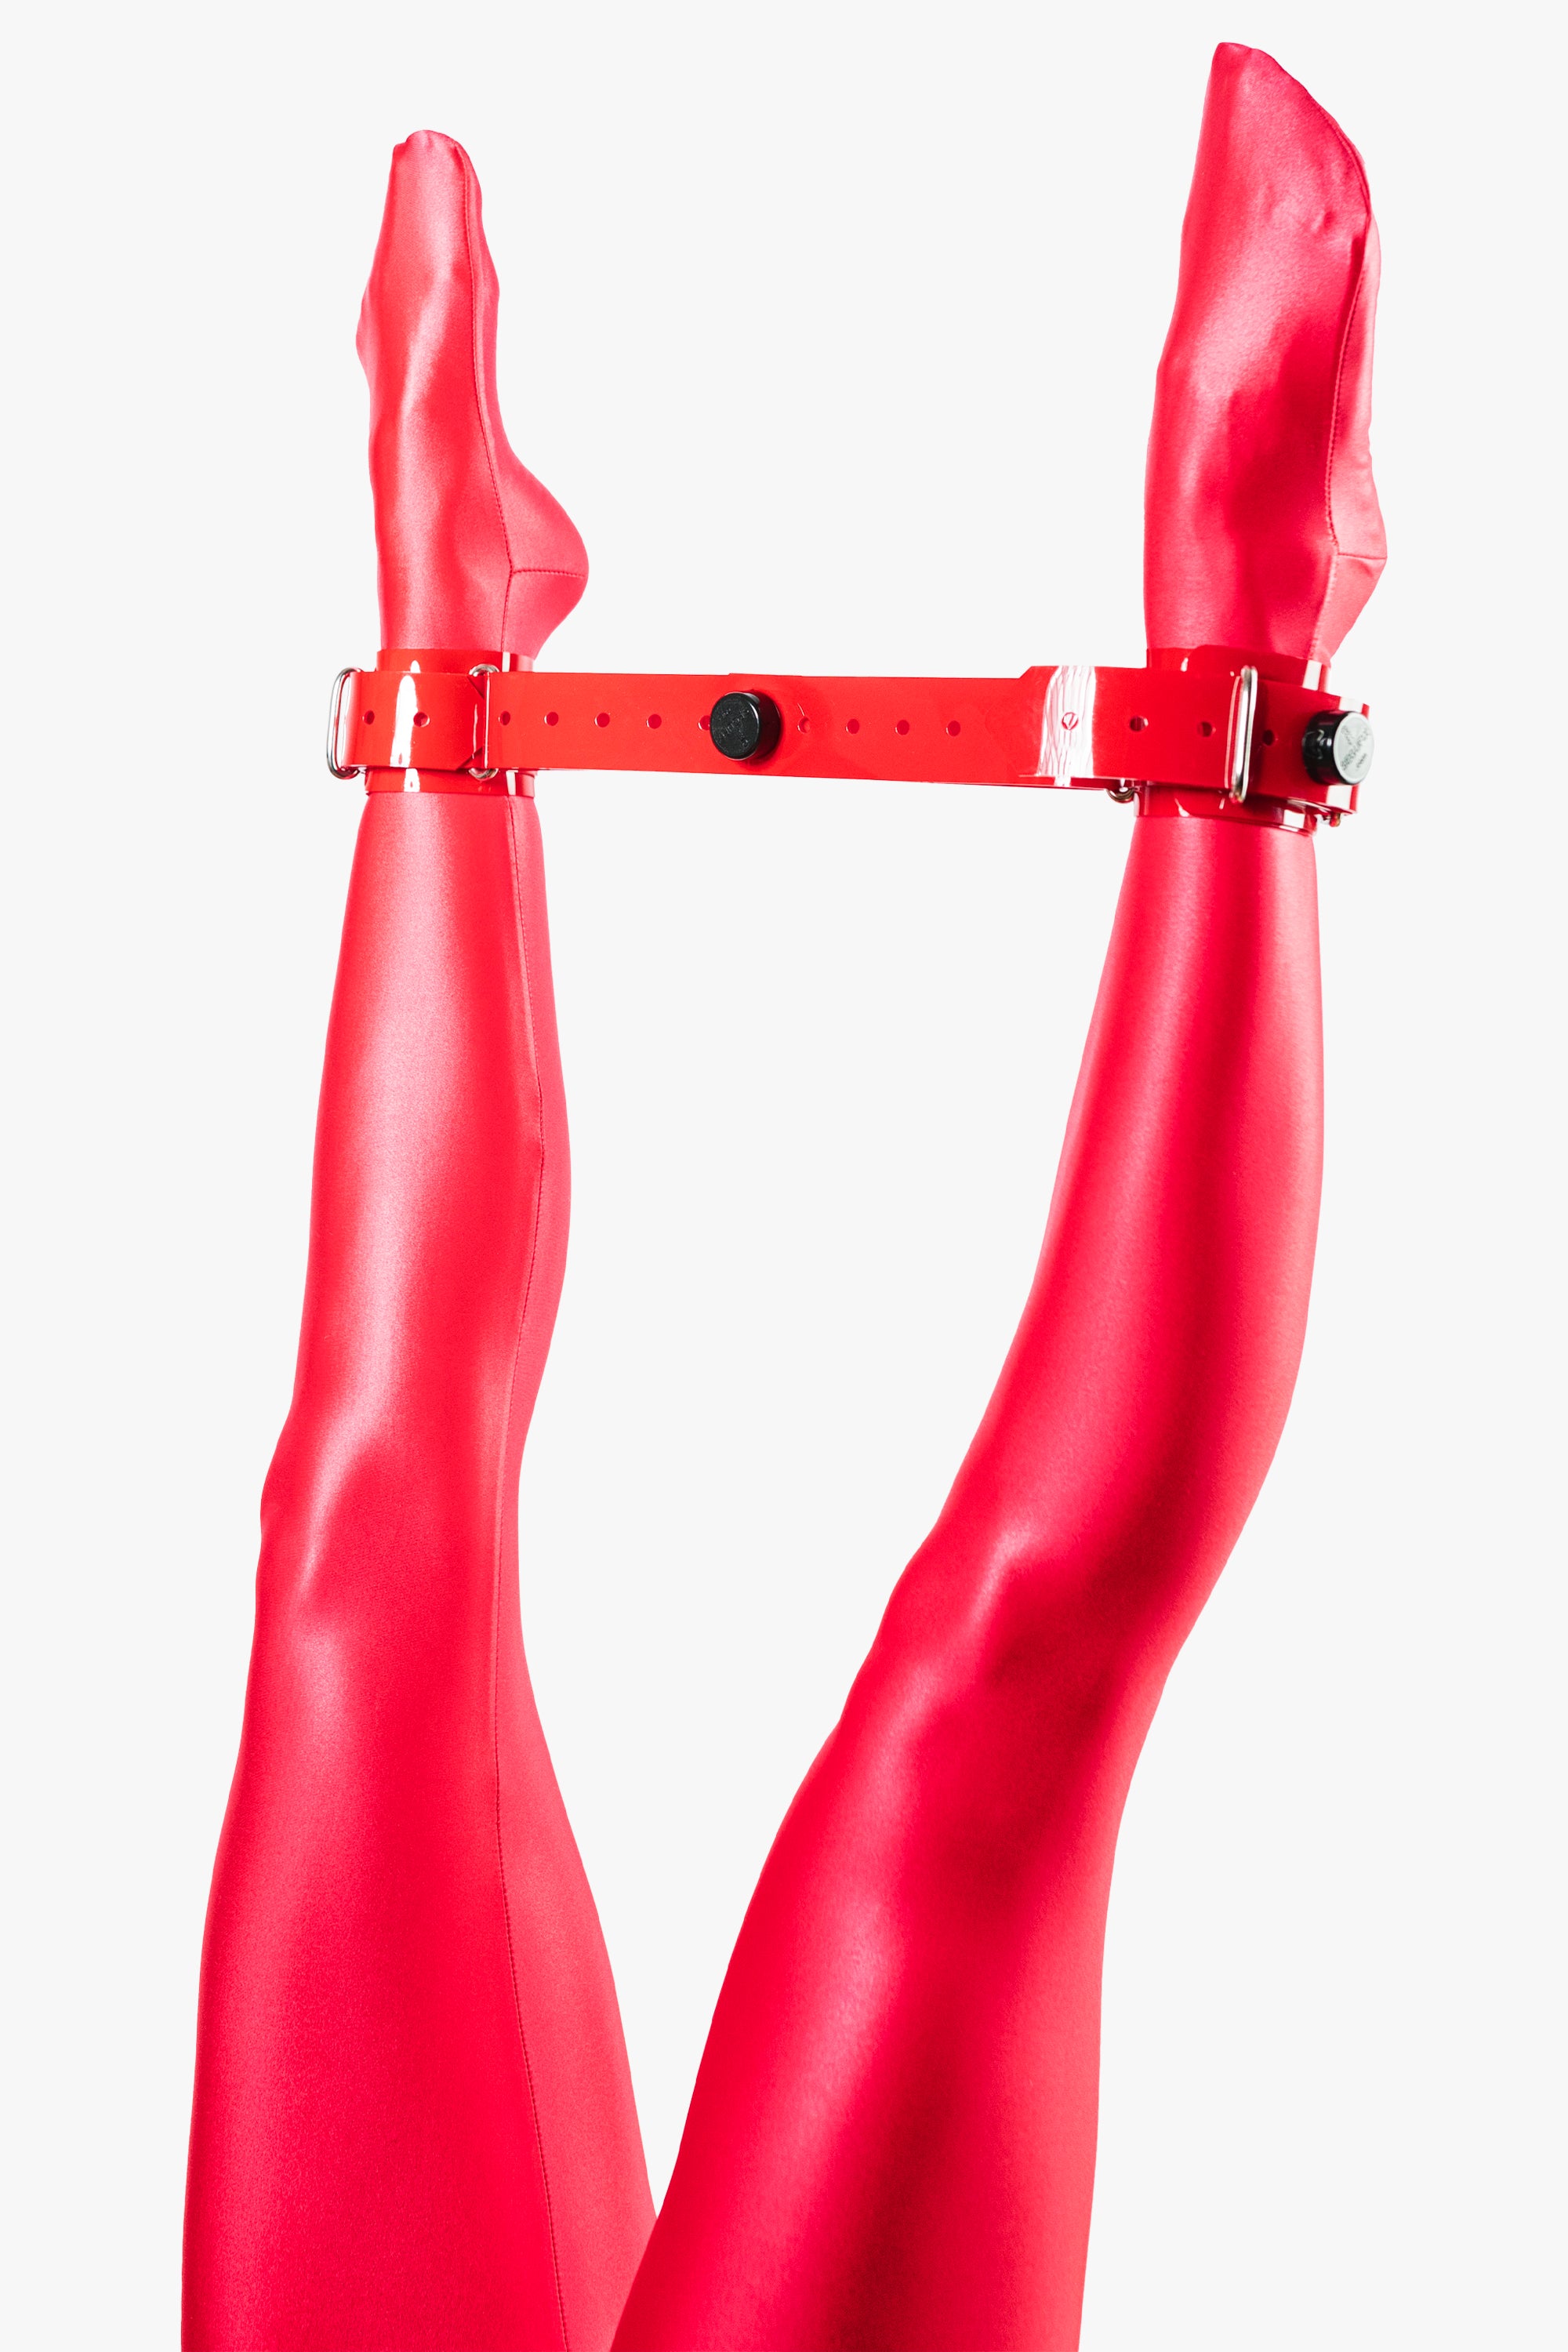 Lockable Segufix ankle cuffs, red/chrome